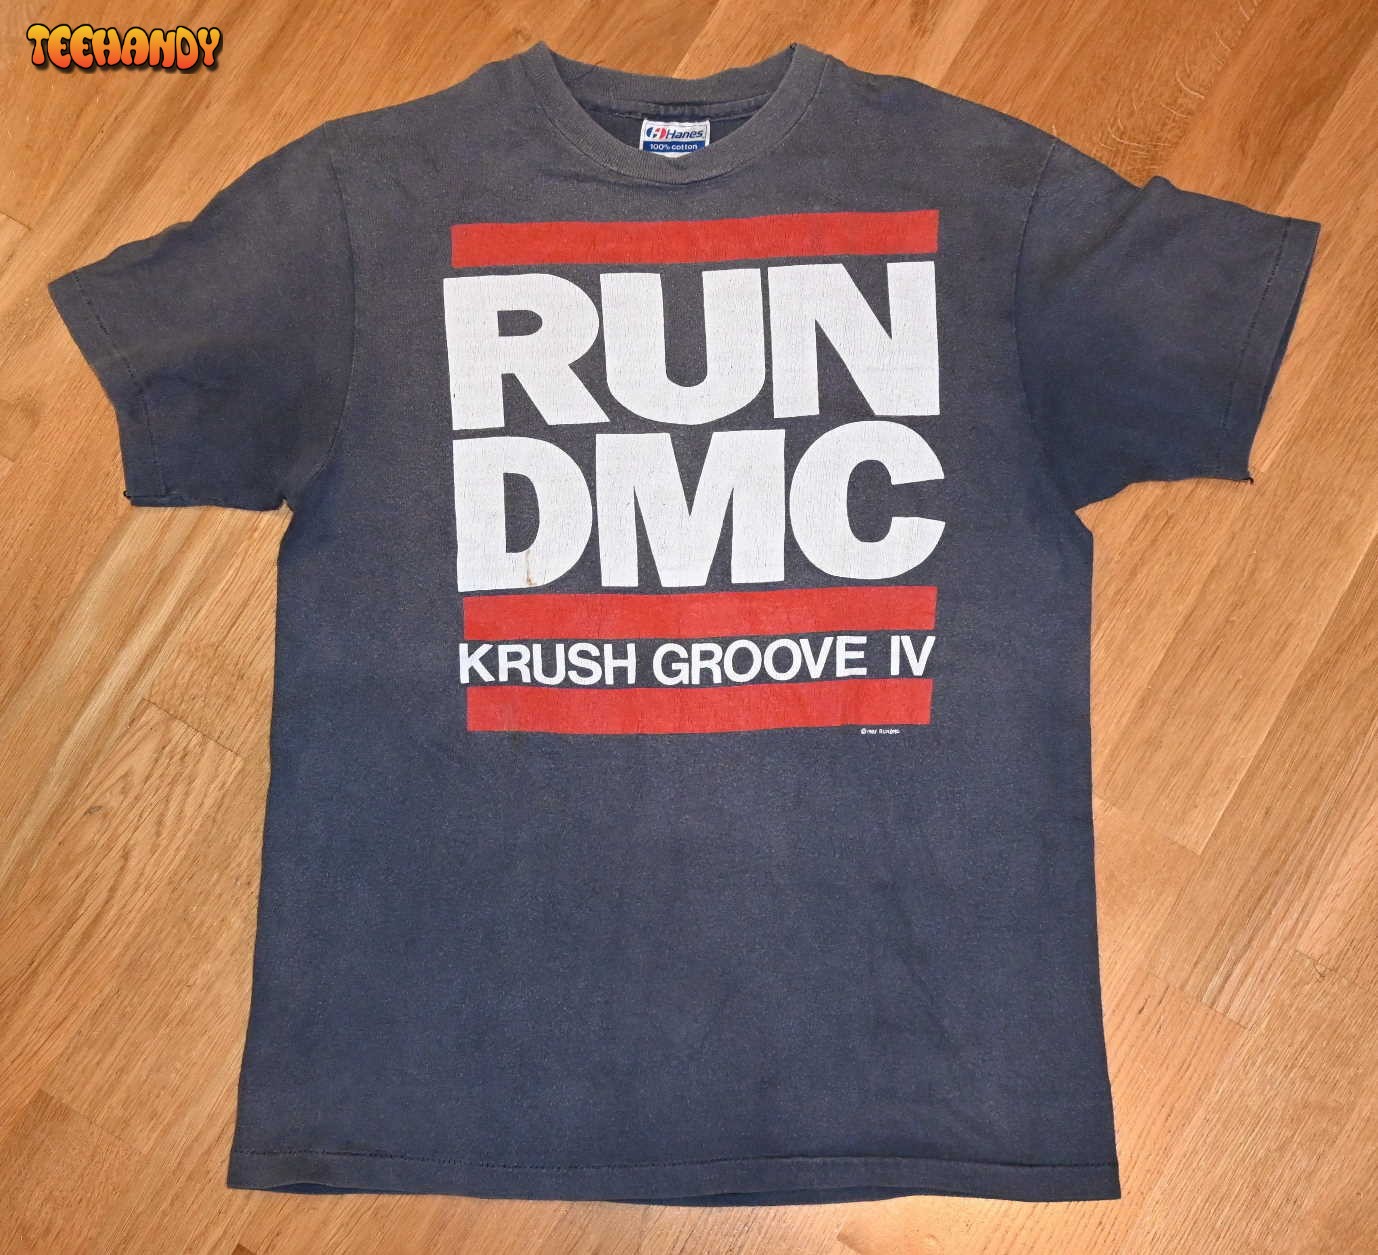 1985 RUN DMC vintage Krush Groove IV concert tour T Shirt